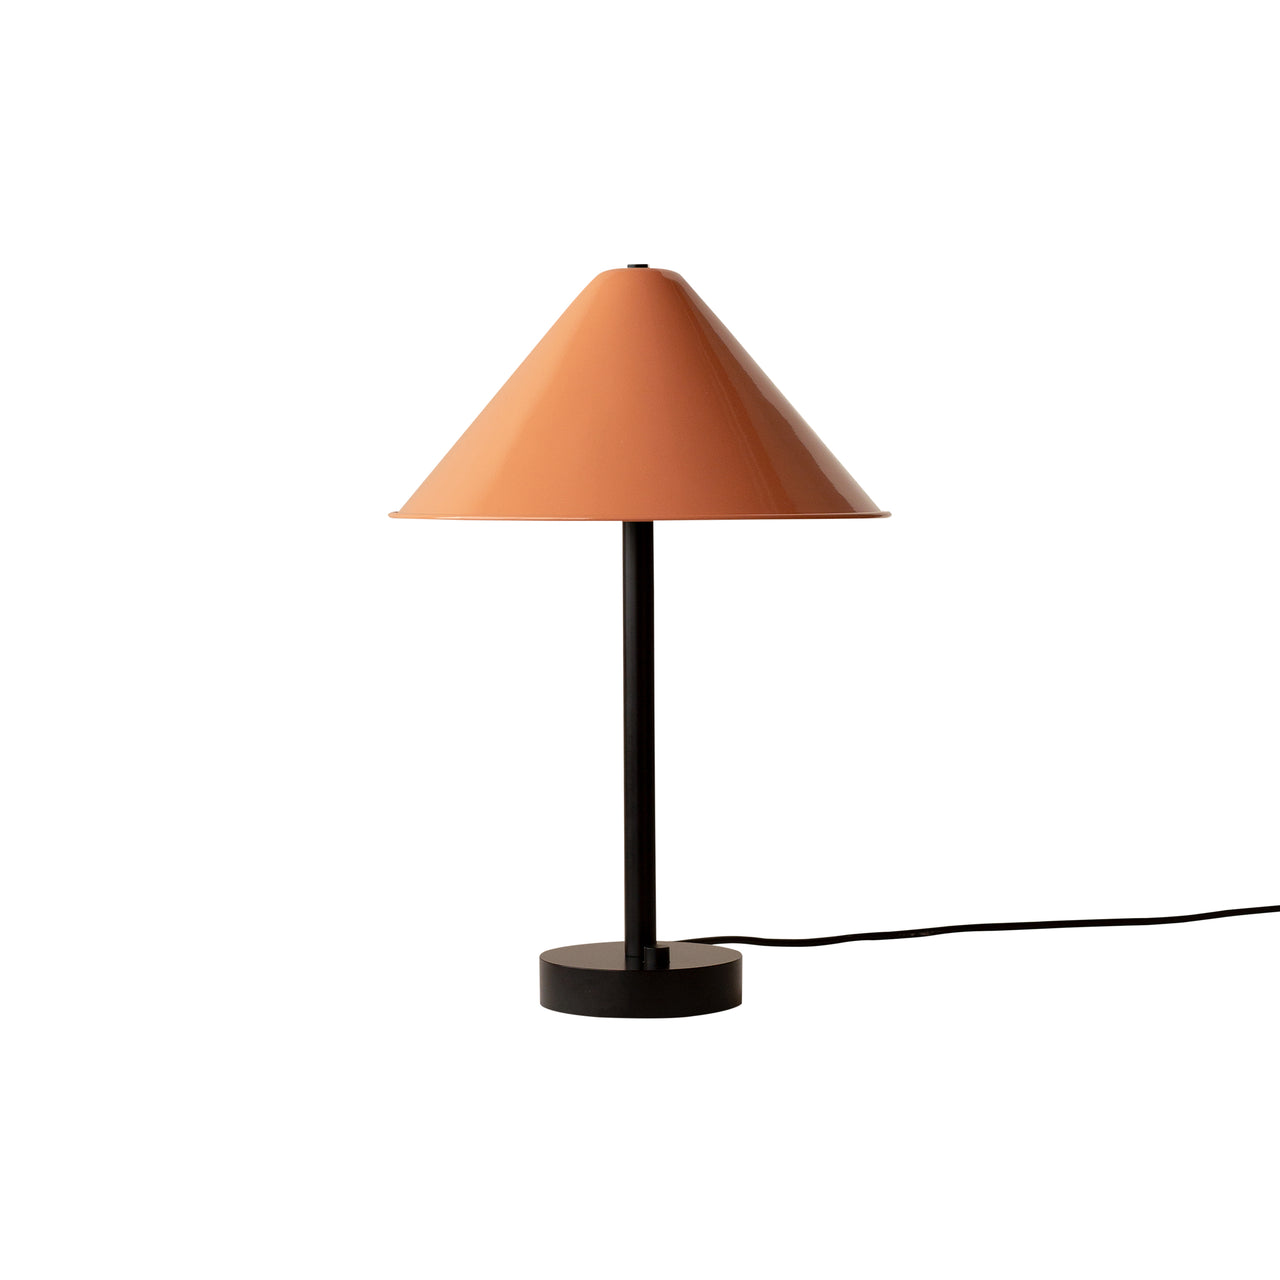 Tipi Table Lamp: Peach + Black